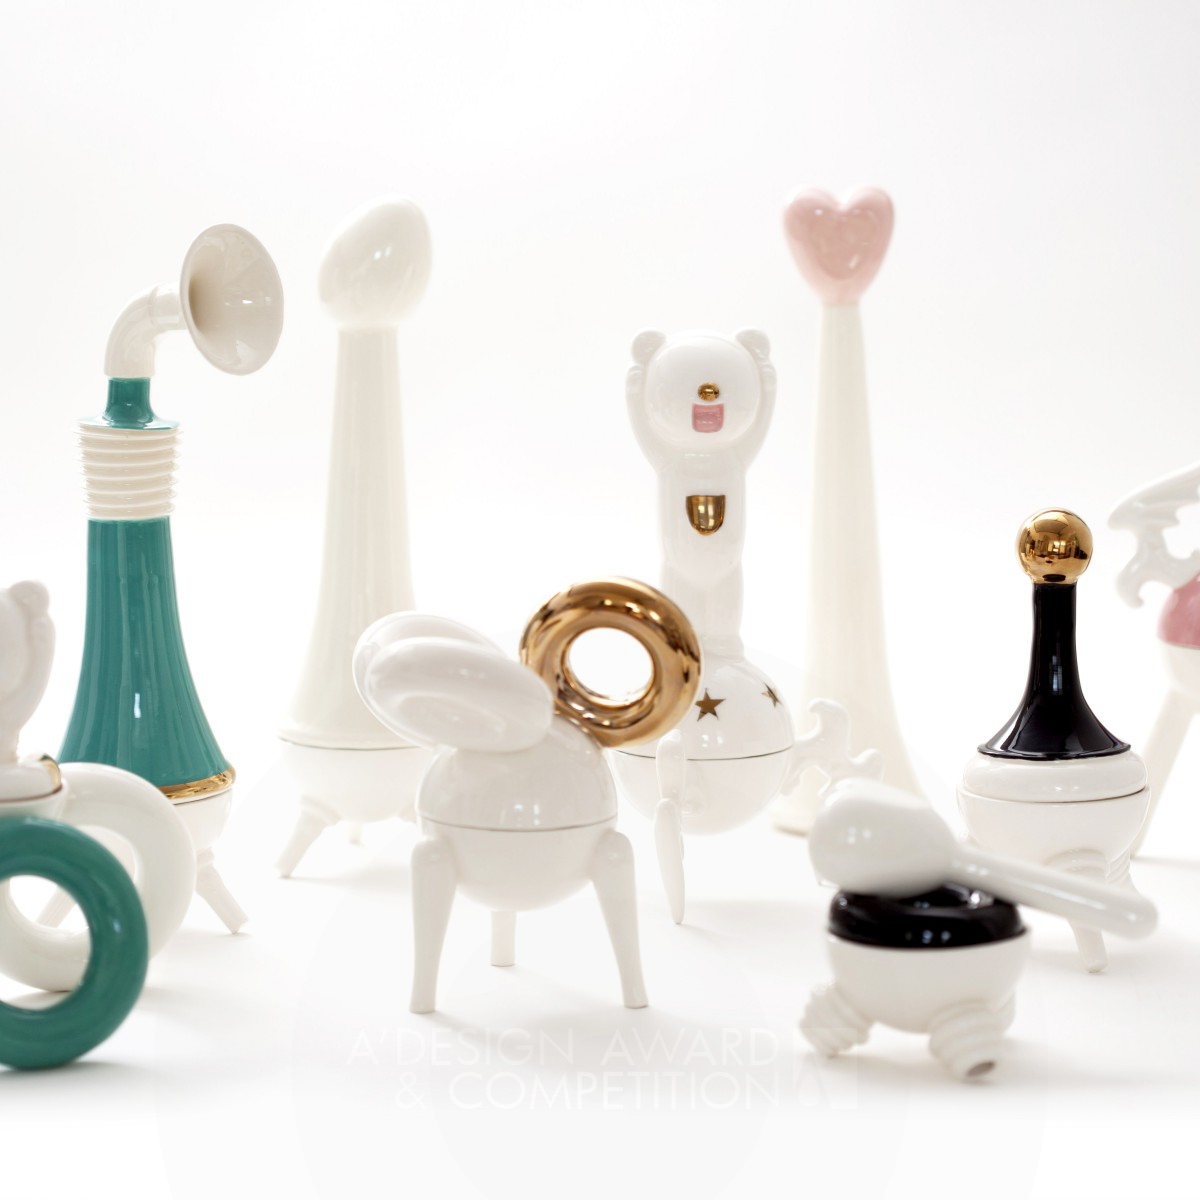 Studio Kahn Design-Art Ceramic Objects